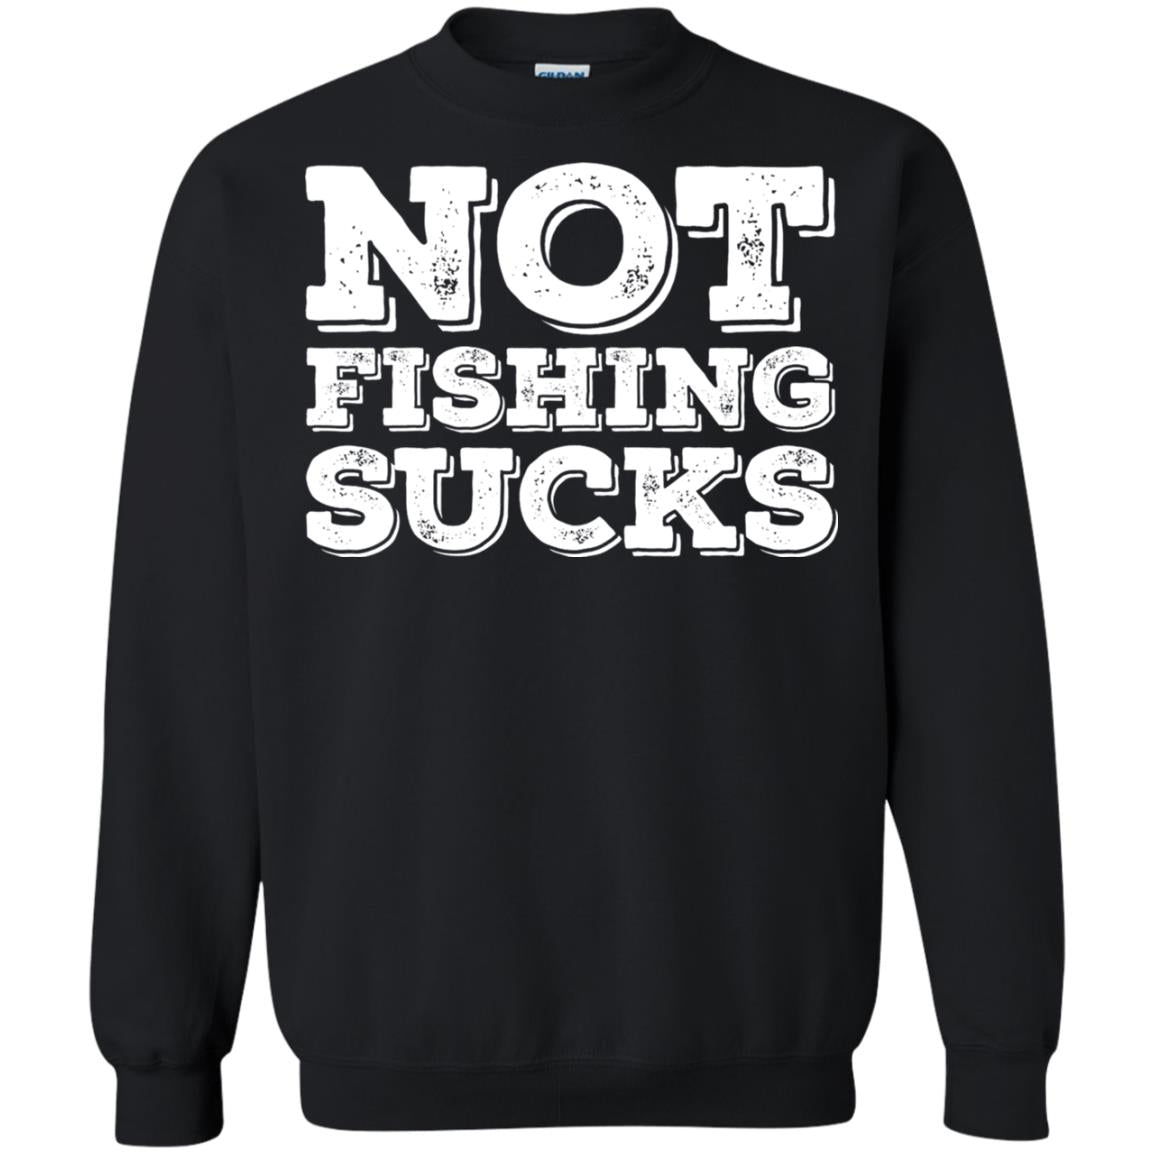 Not Fishing Sucks Love Fisherman Angler Boat Lake Shirt